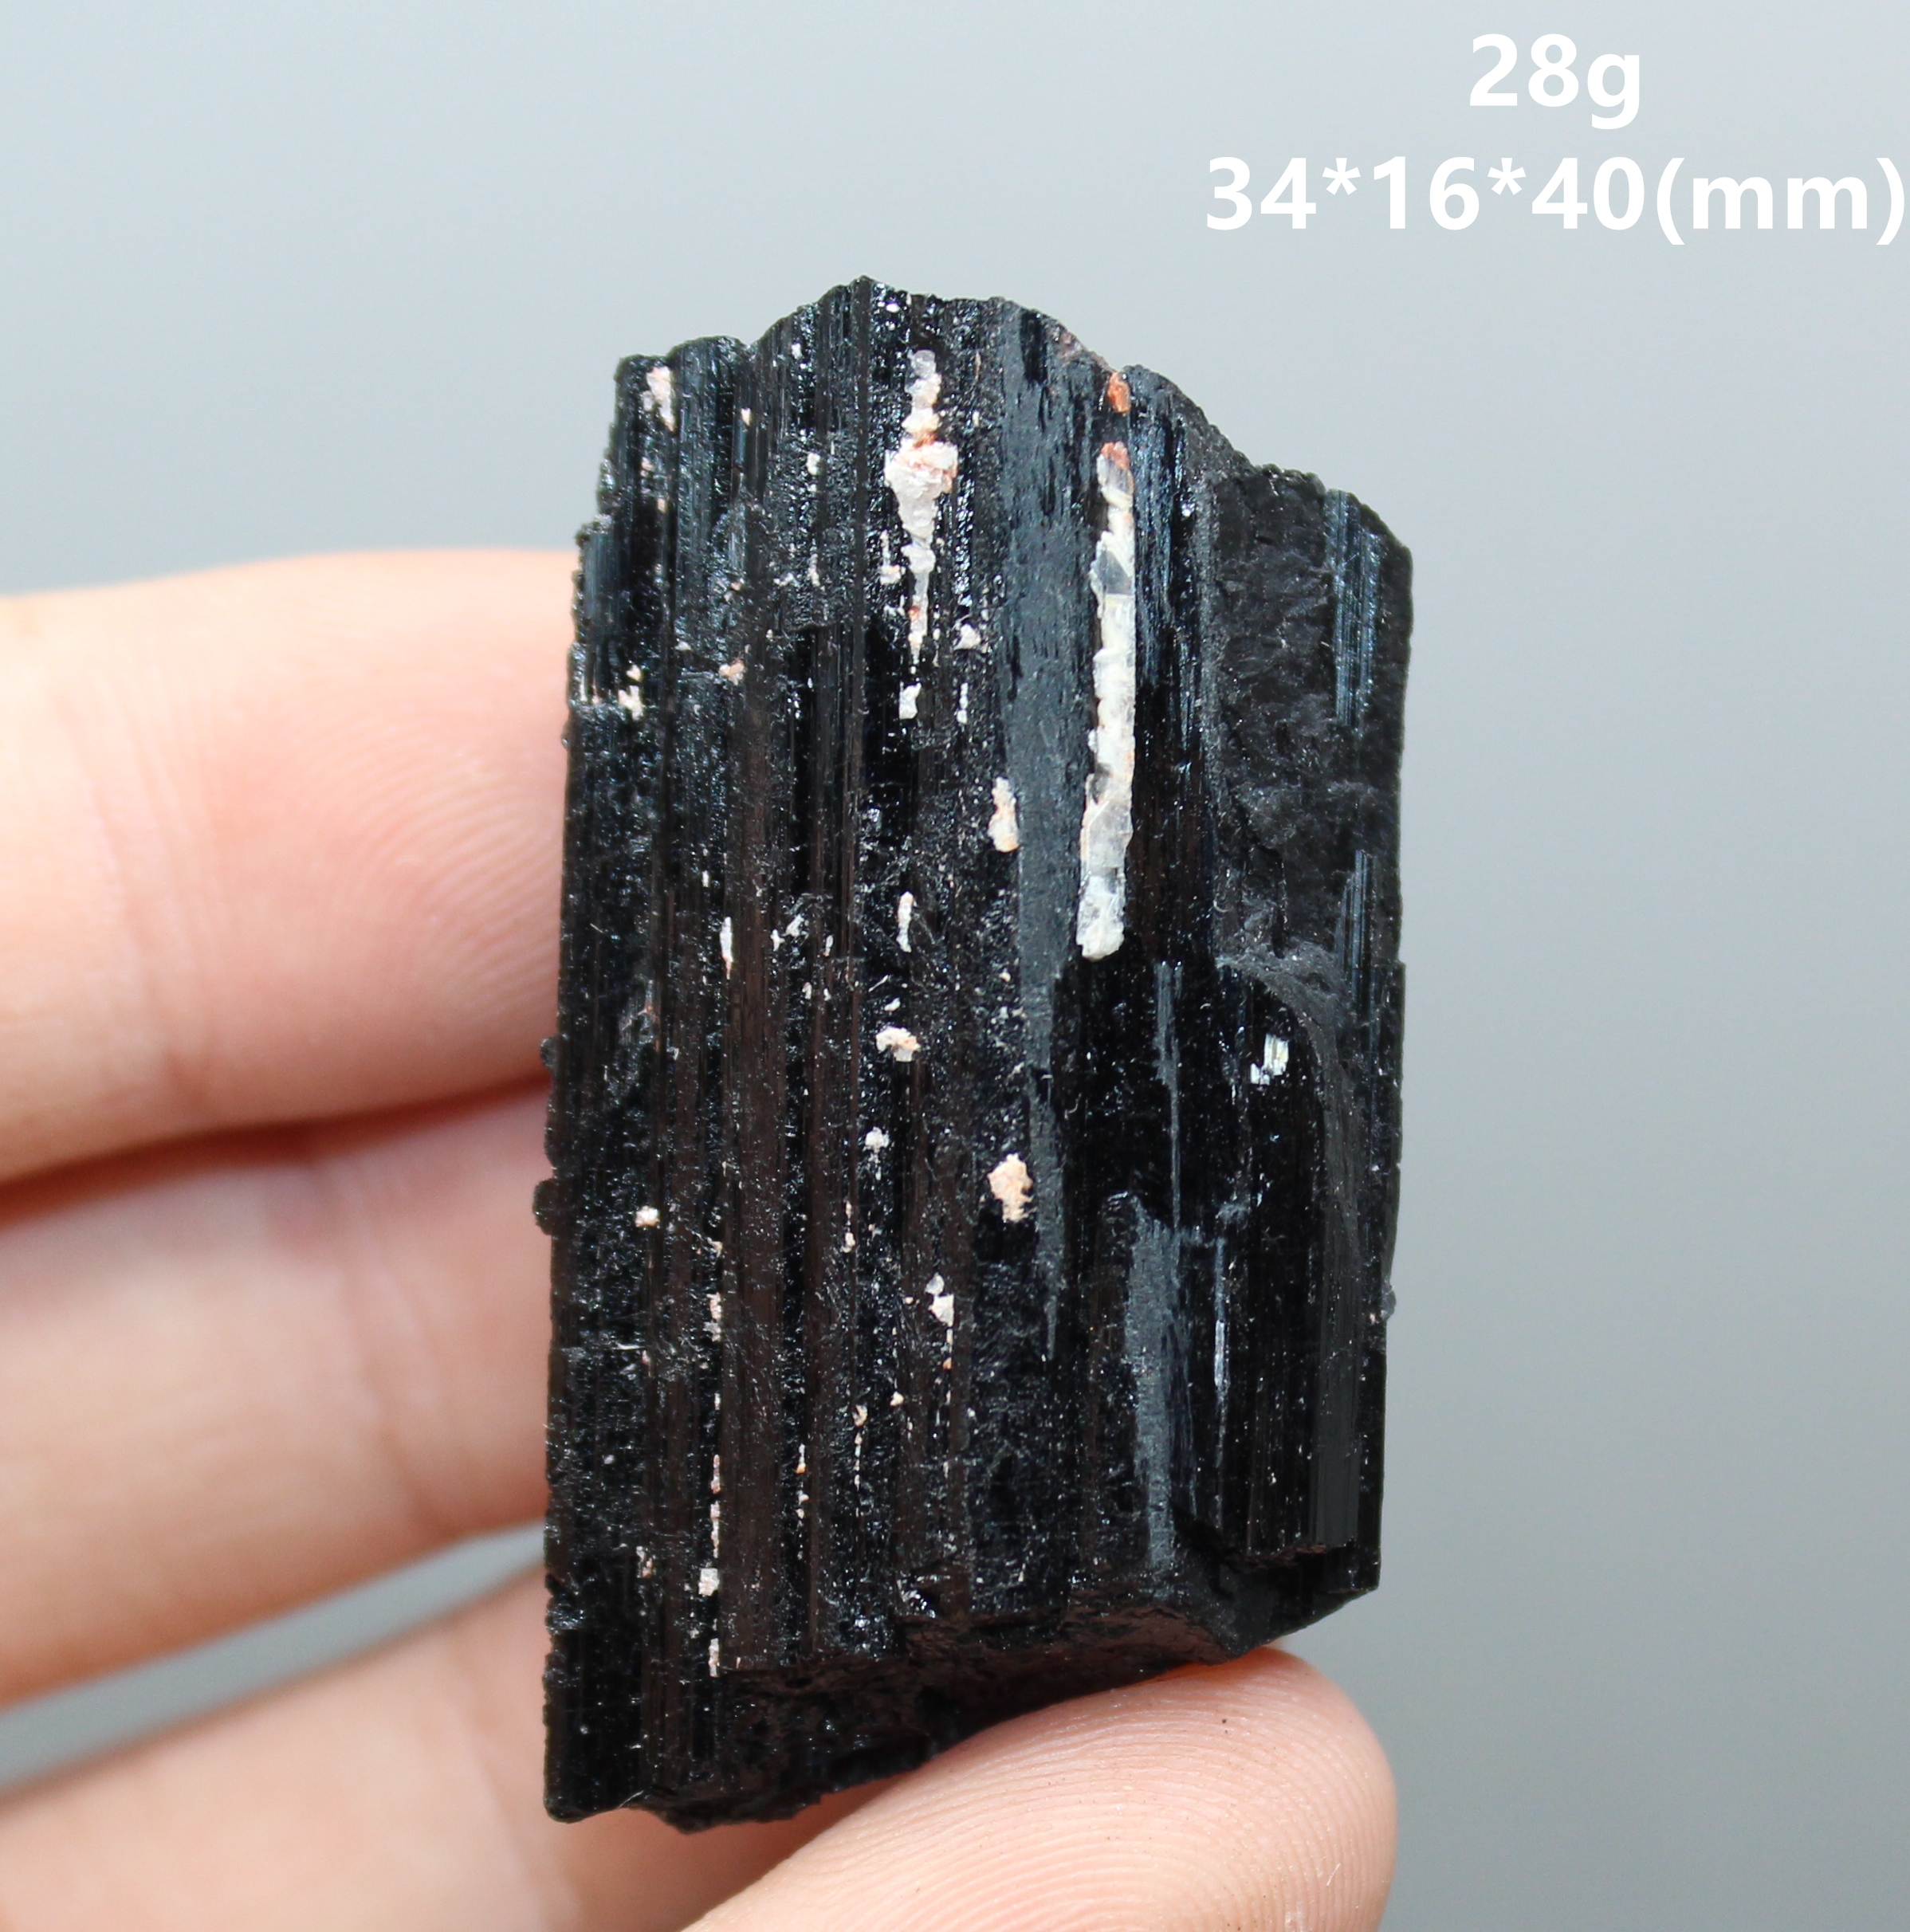 100% Natural Brazil black tourmaline mineral crystal specimens stones and crystals quartz Healing crystal